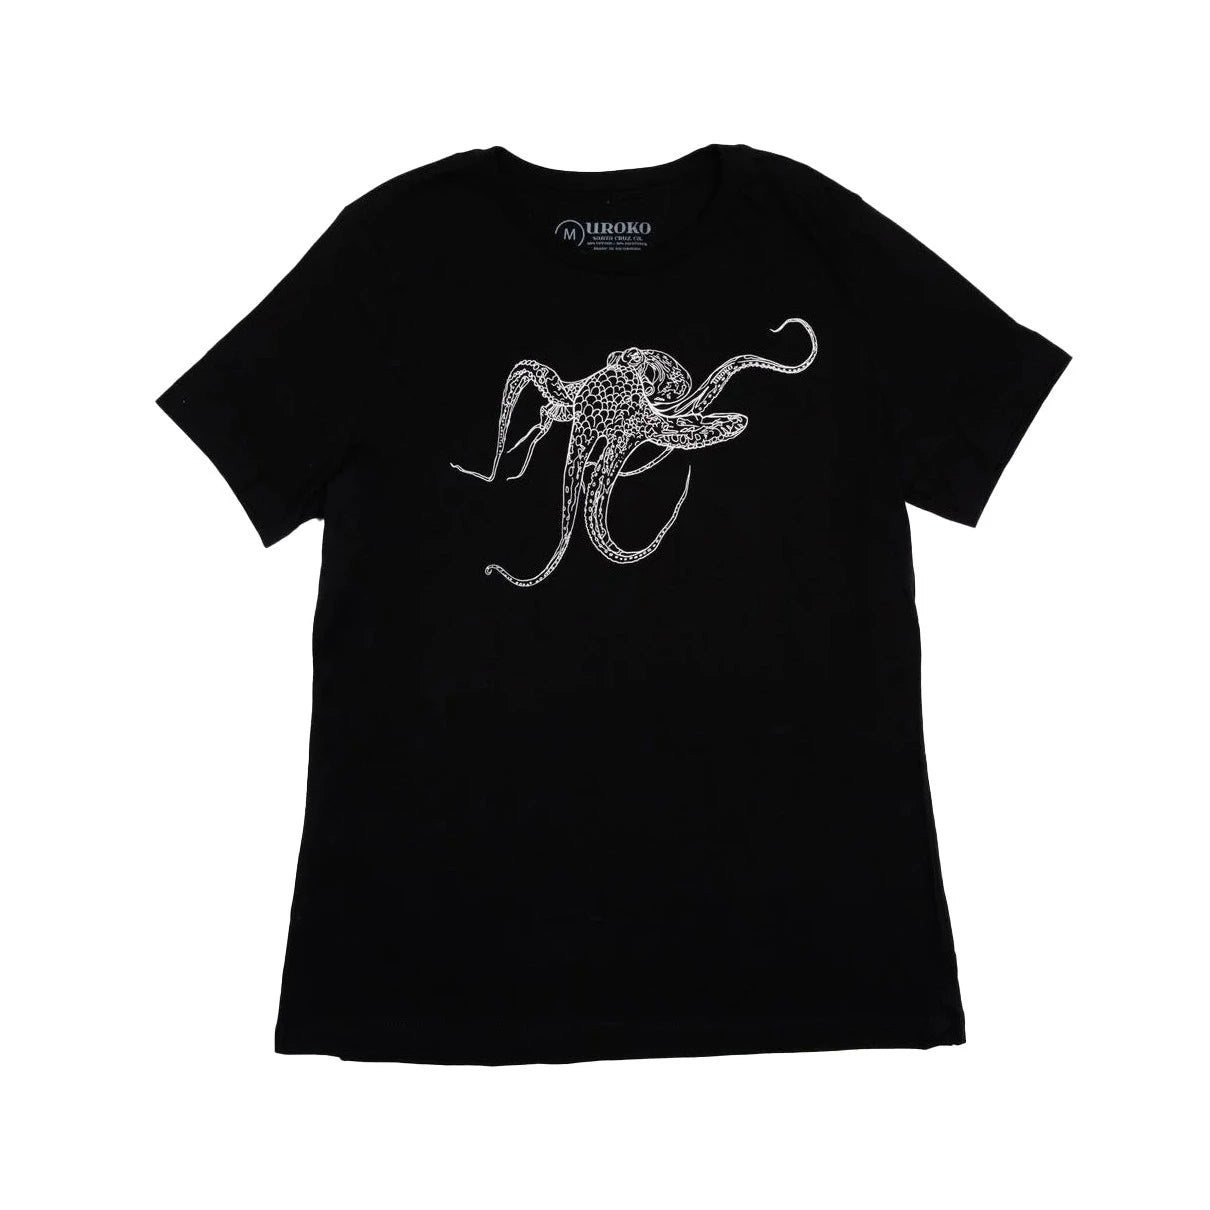 Women's "Giant Pacific Octopus T-Shirt"